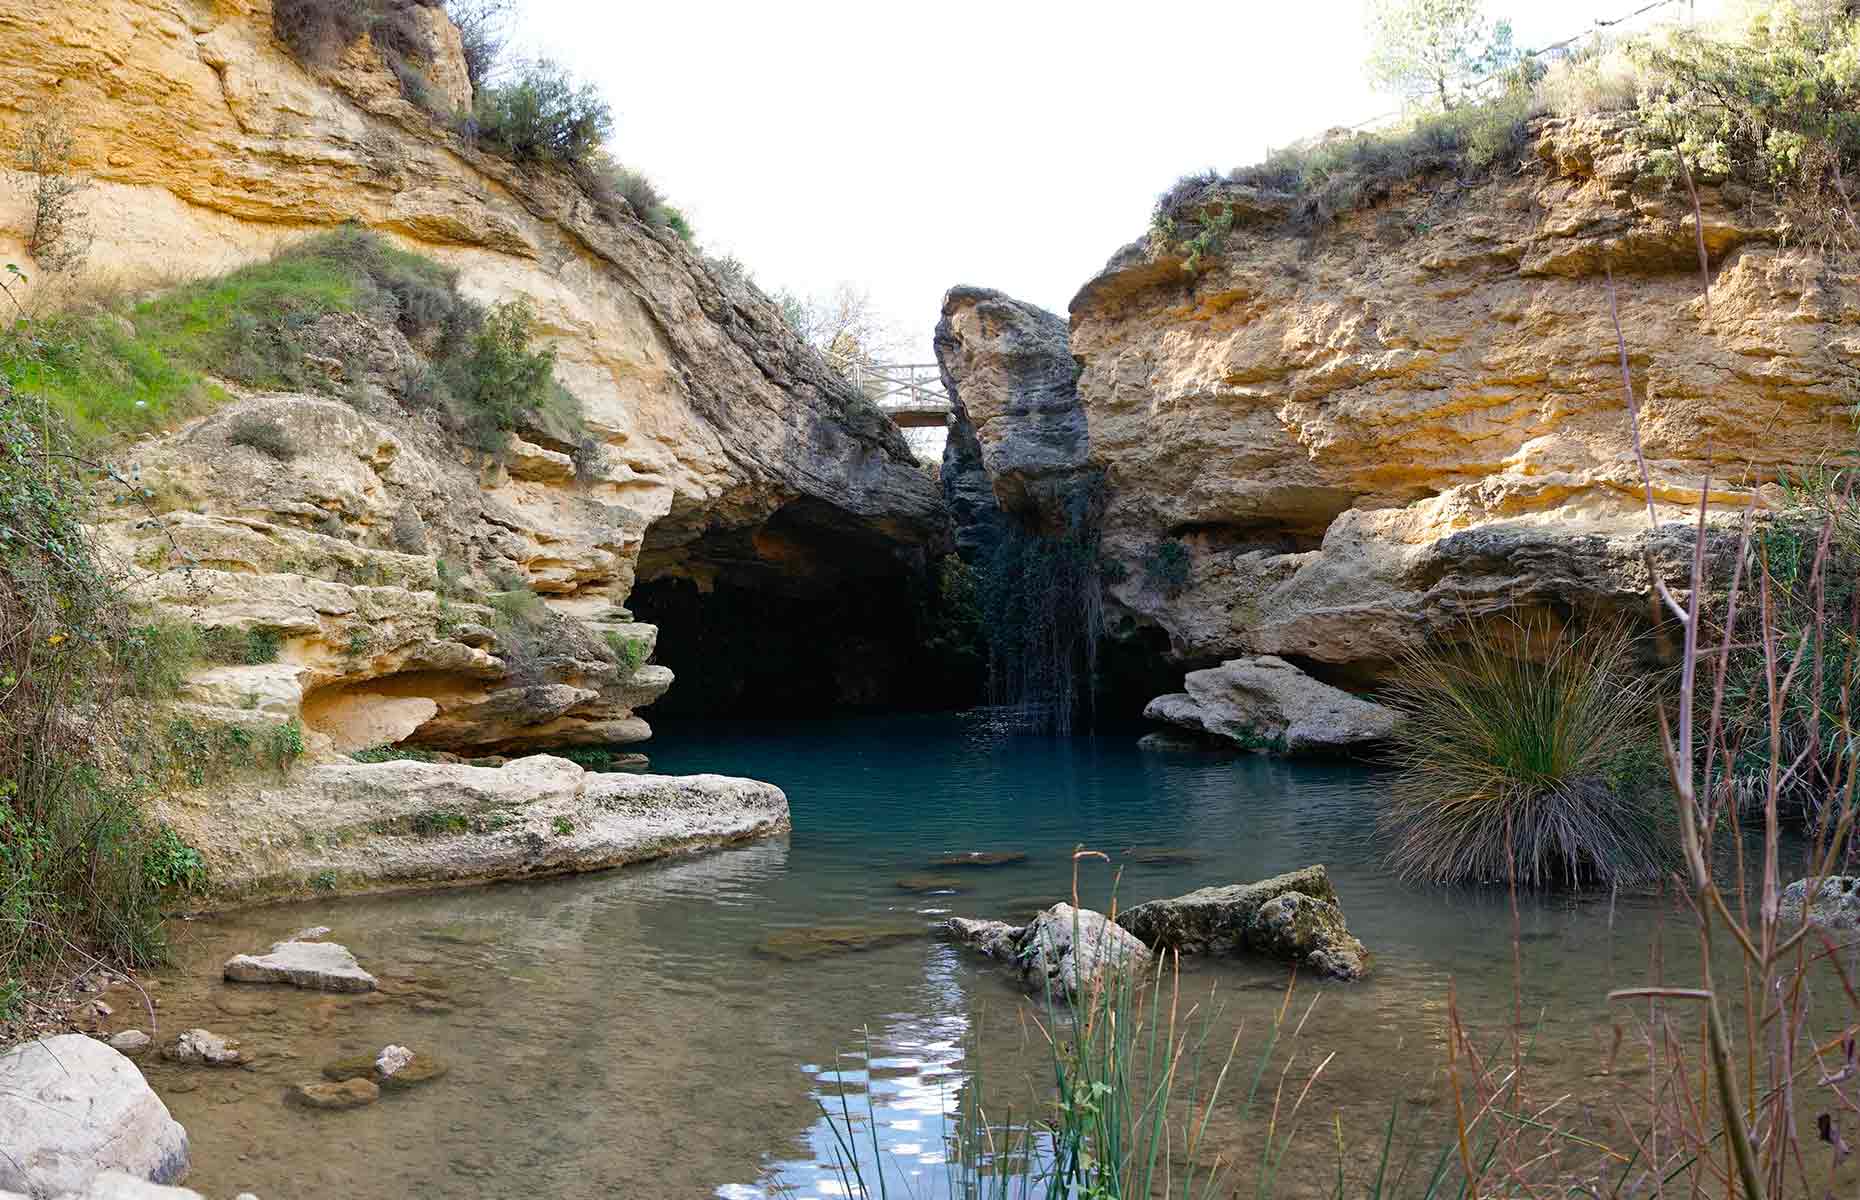 Pools at El Salto del Usero, Murcia (Image: makasana photo/Shutterstock)